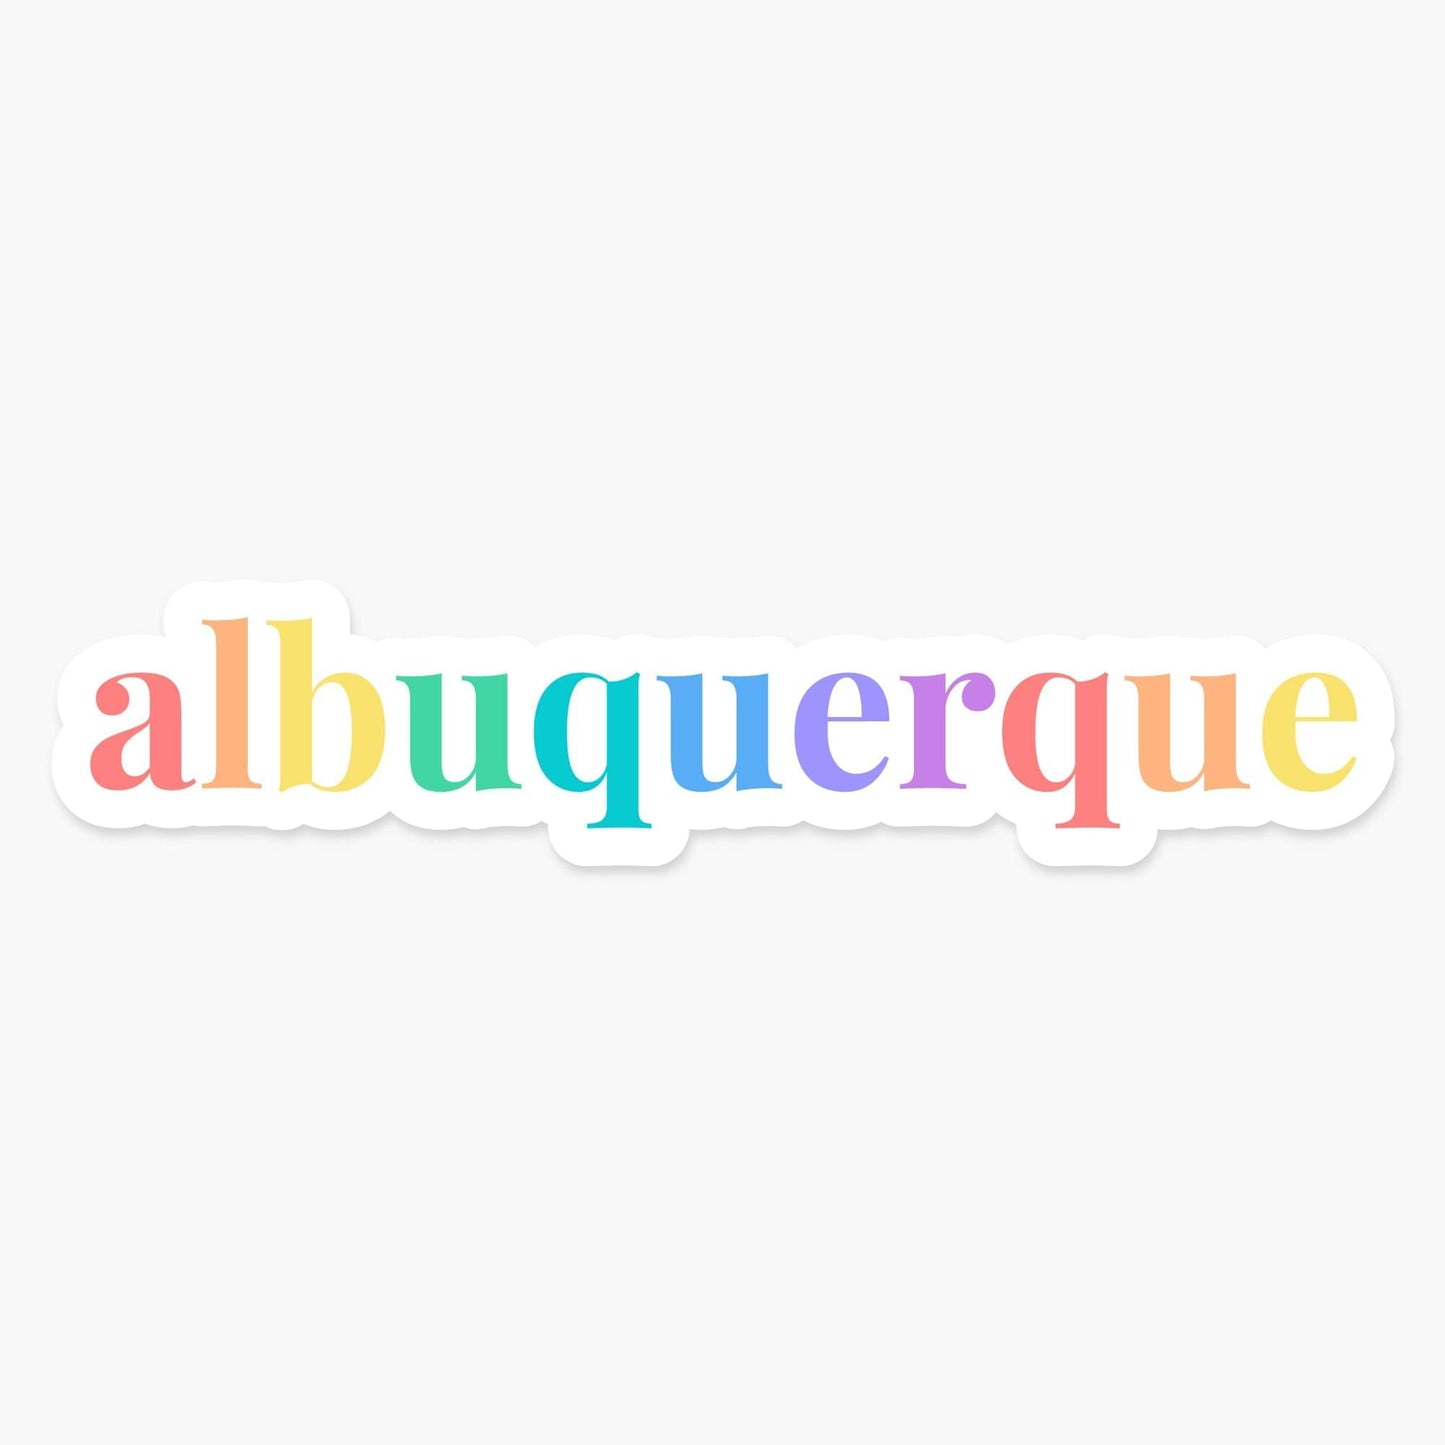 Albuquerque, New Mexico Sticker